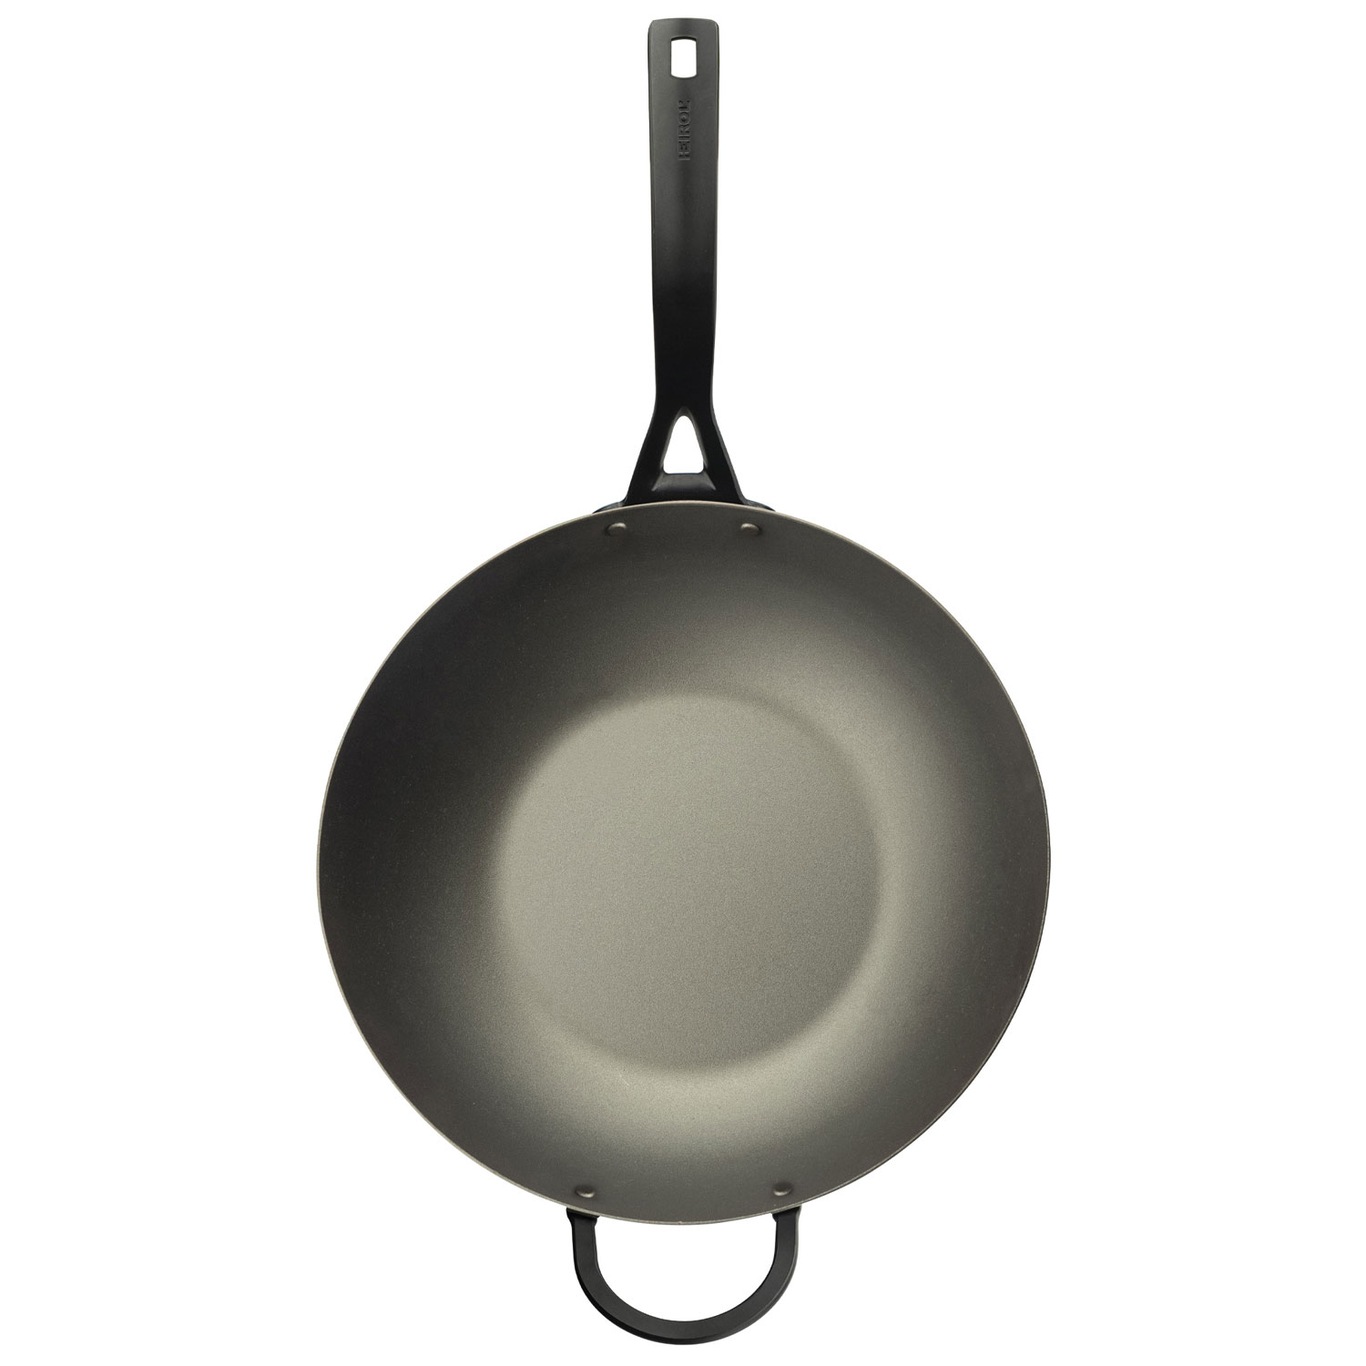 Blacksteel Pro Wok Pan, 33 cm